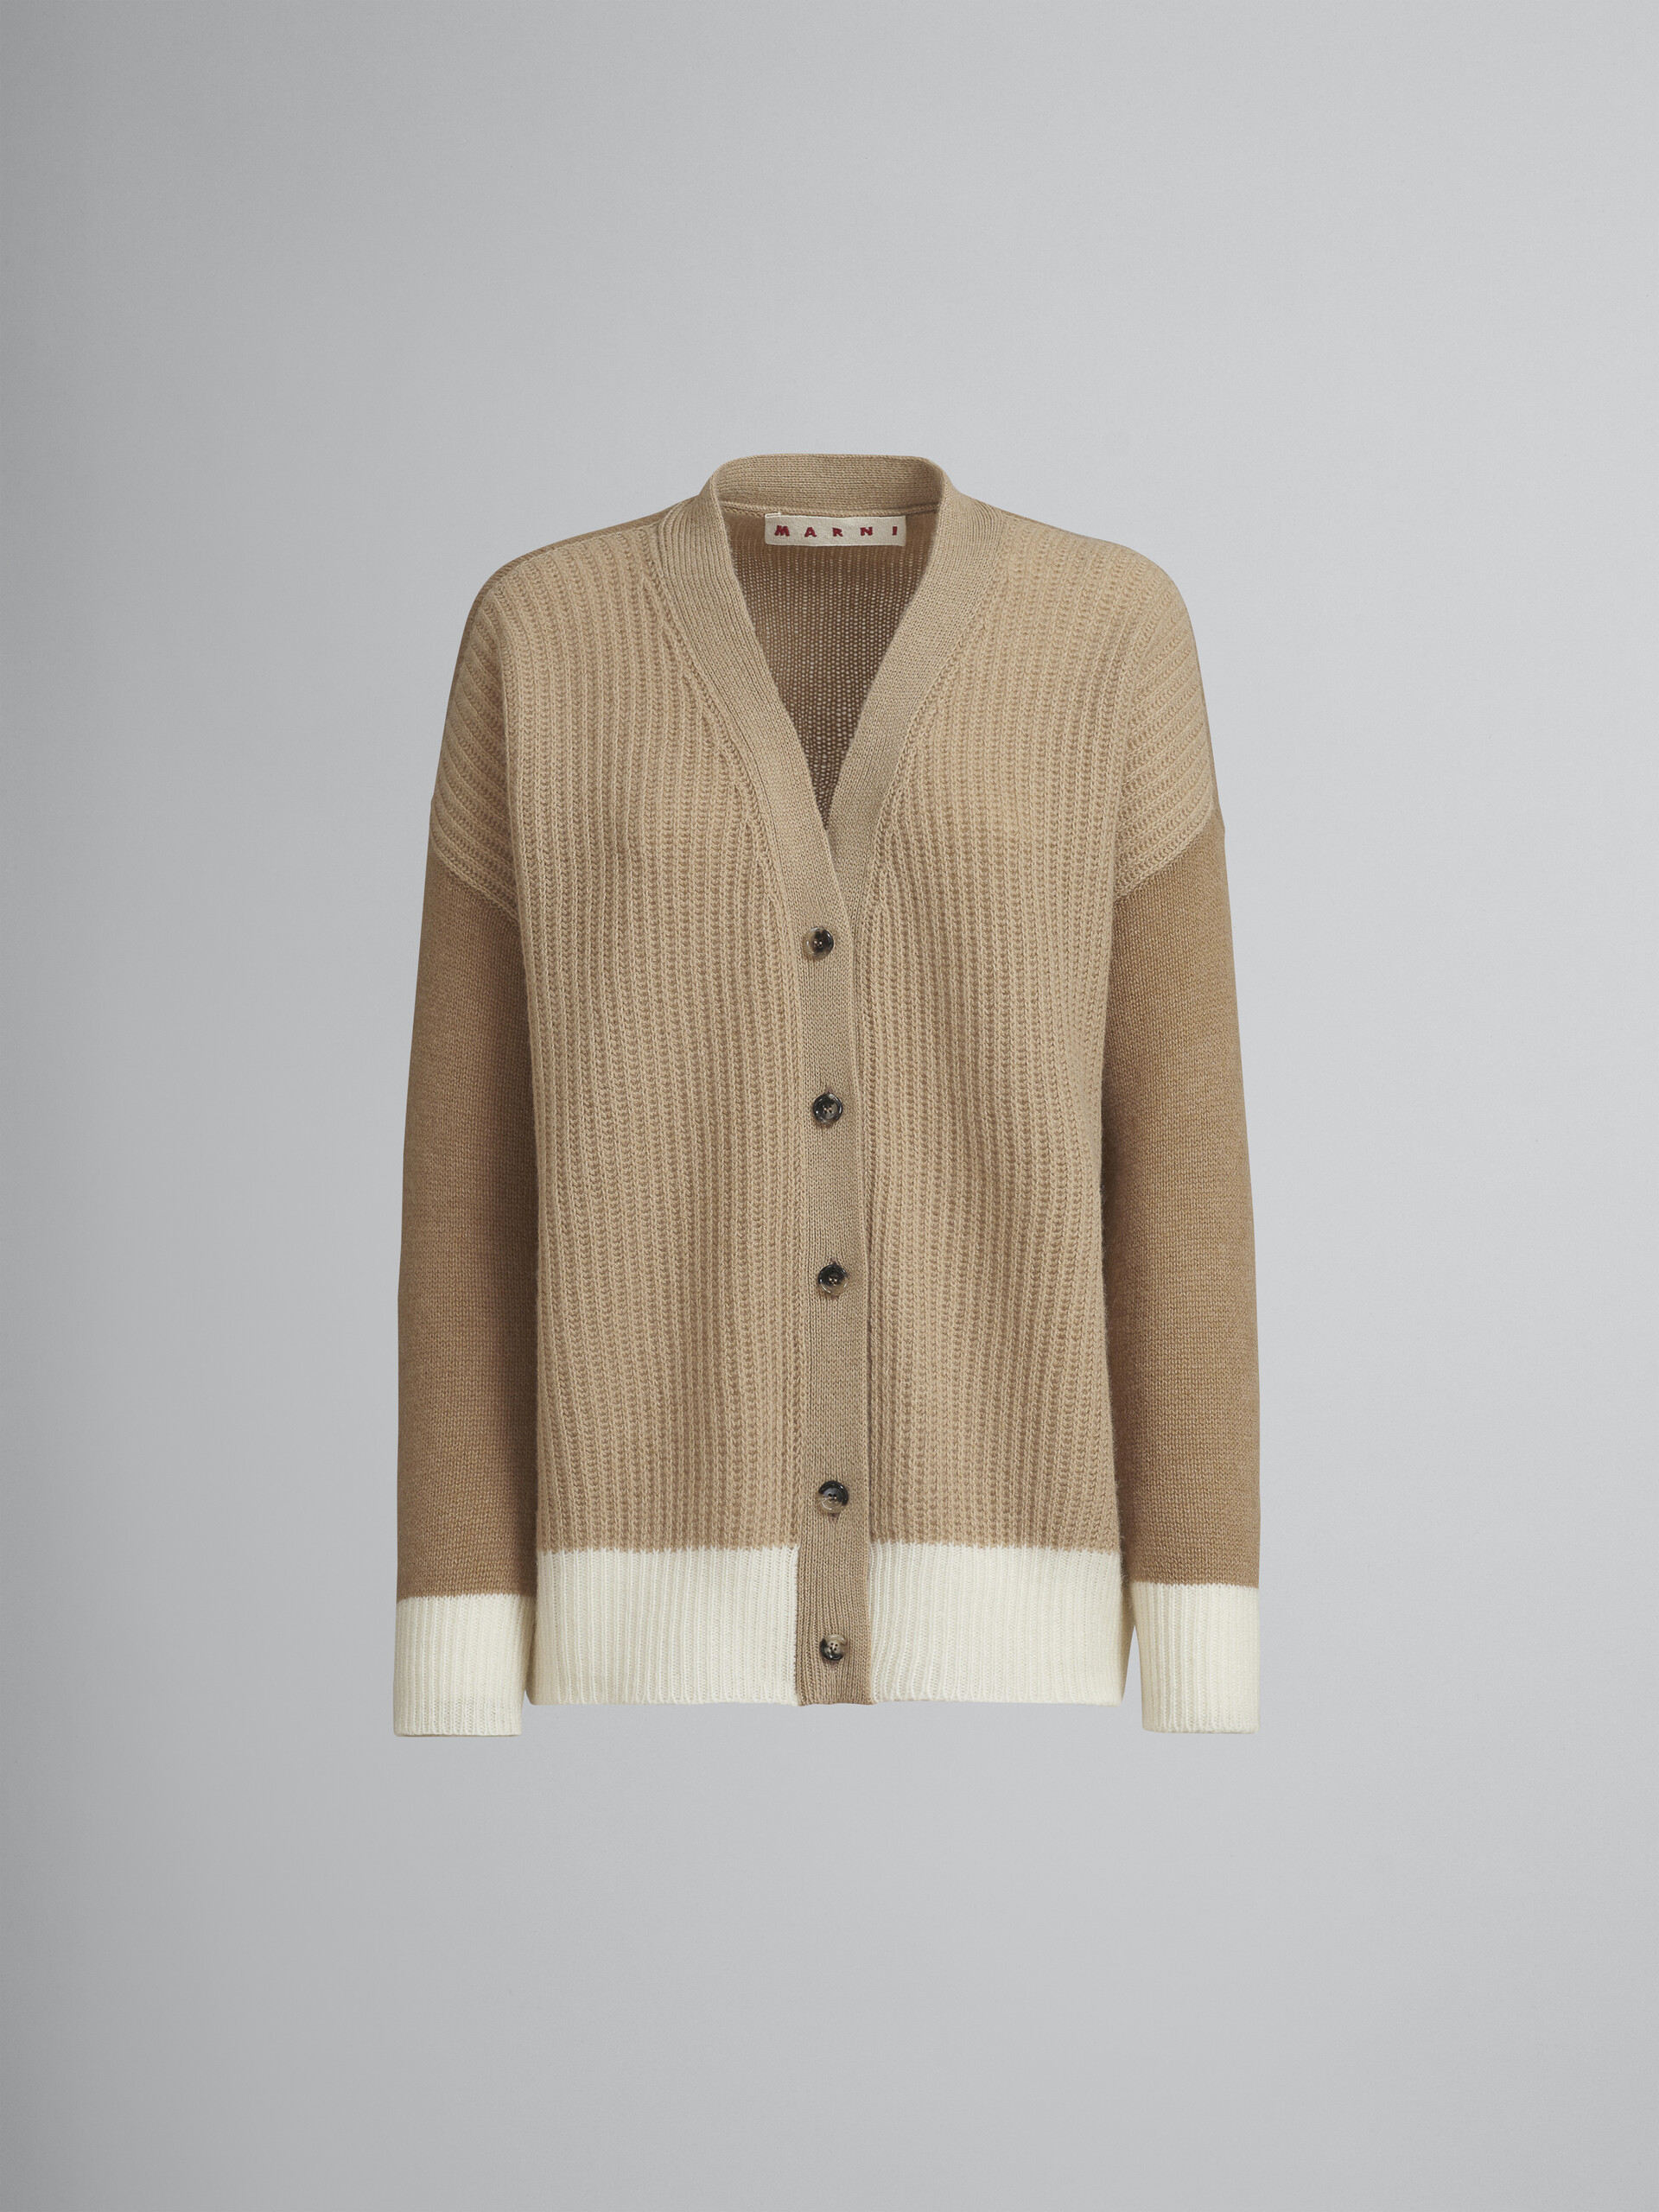 Brown cashmere V-neck cardigan - Pullovers - Image 1